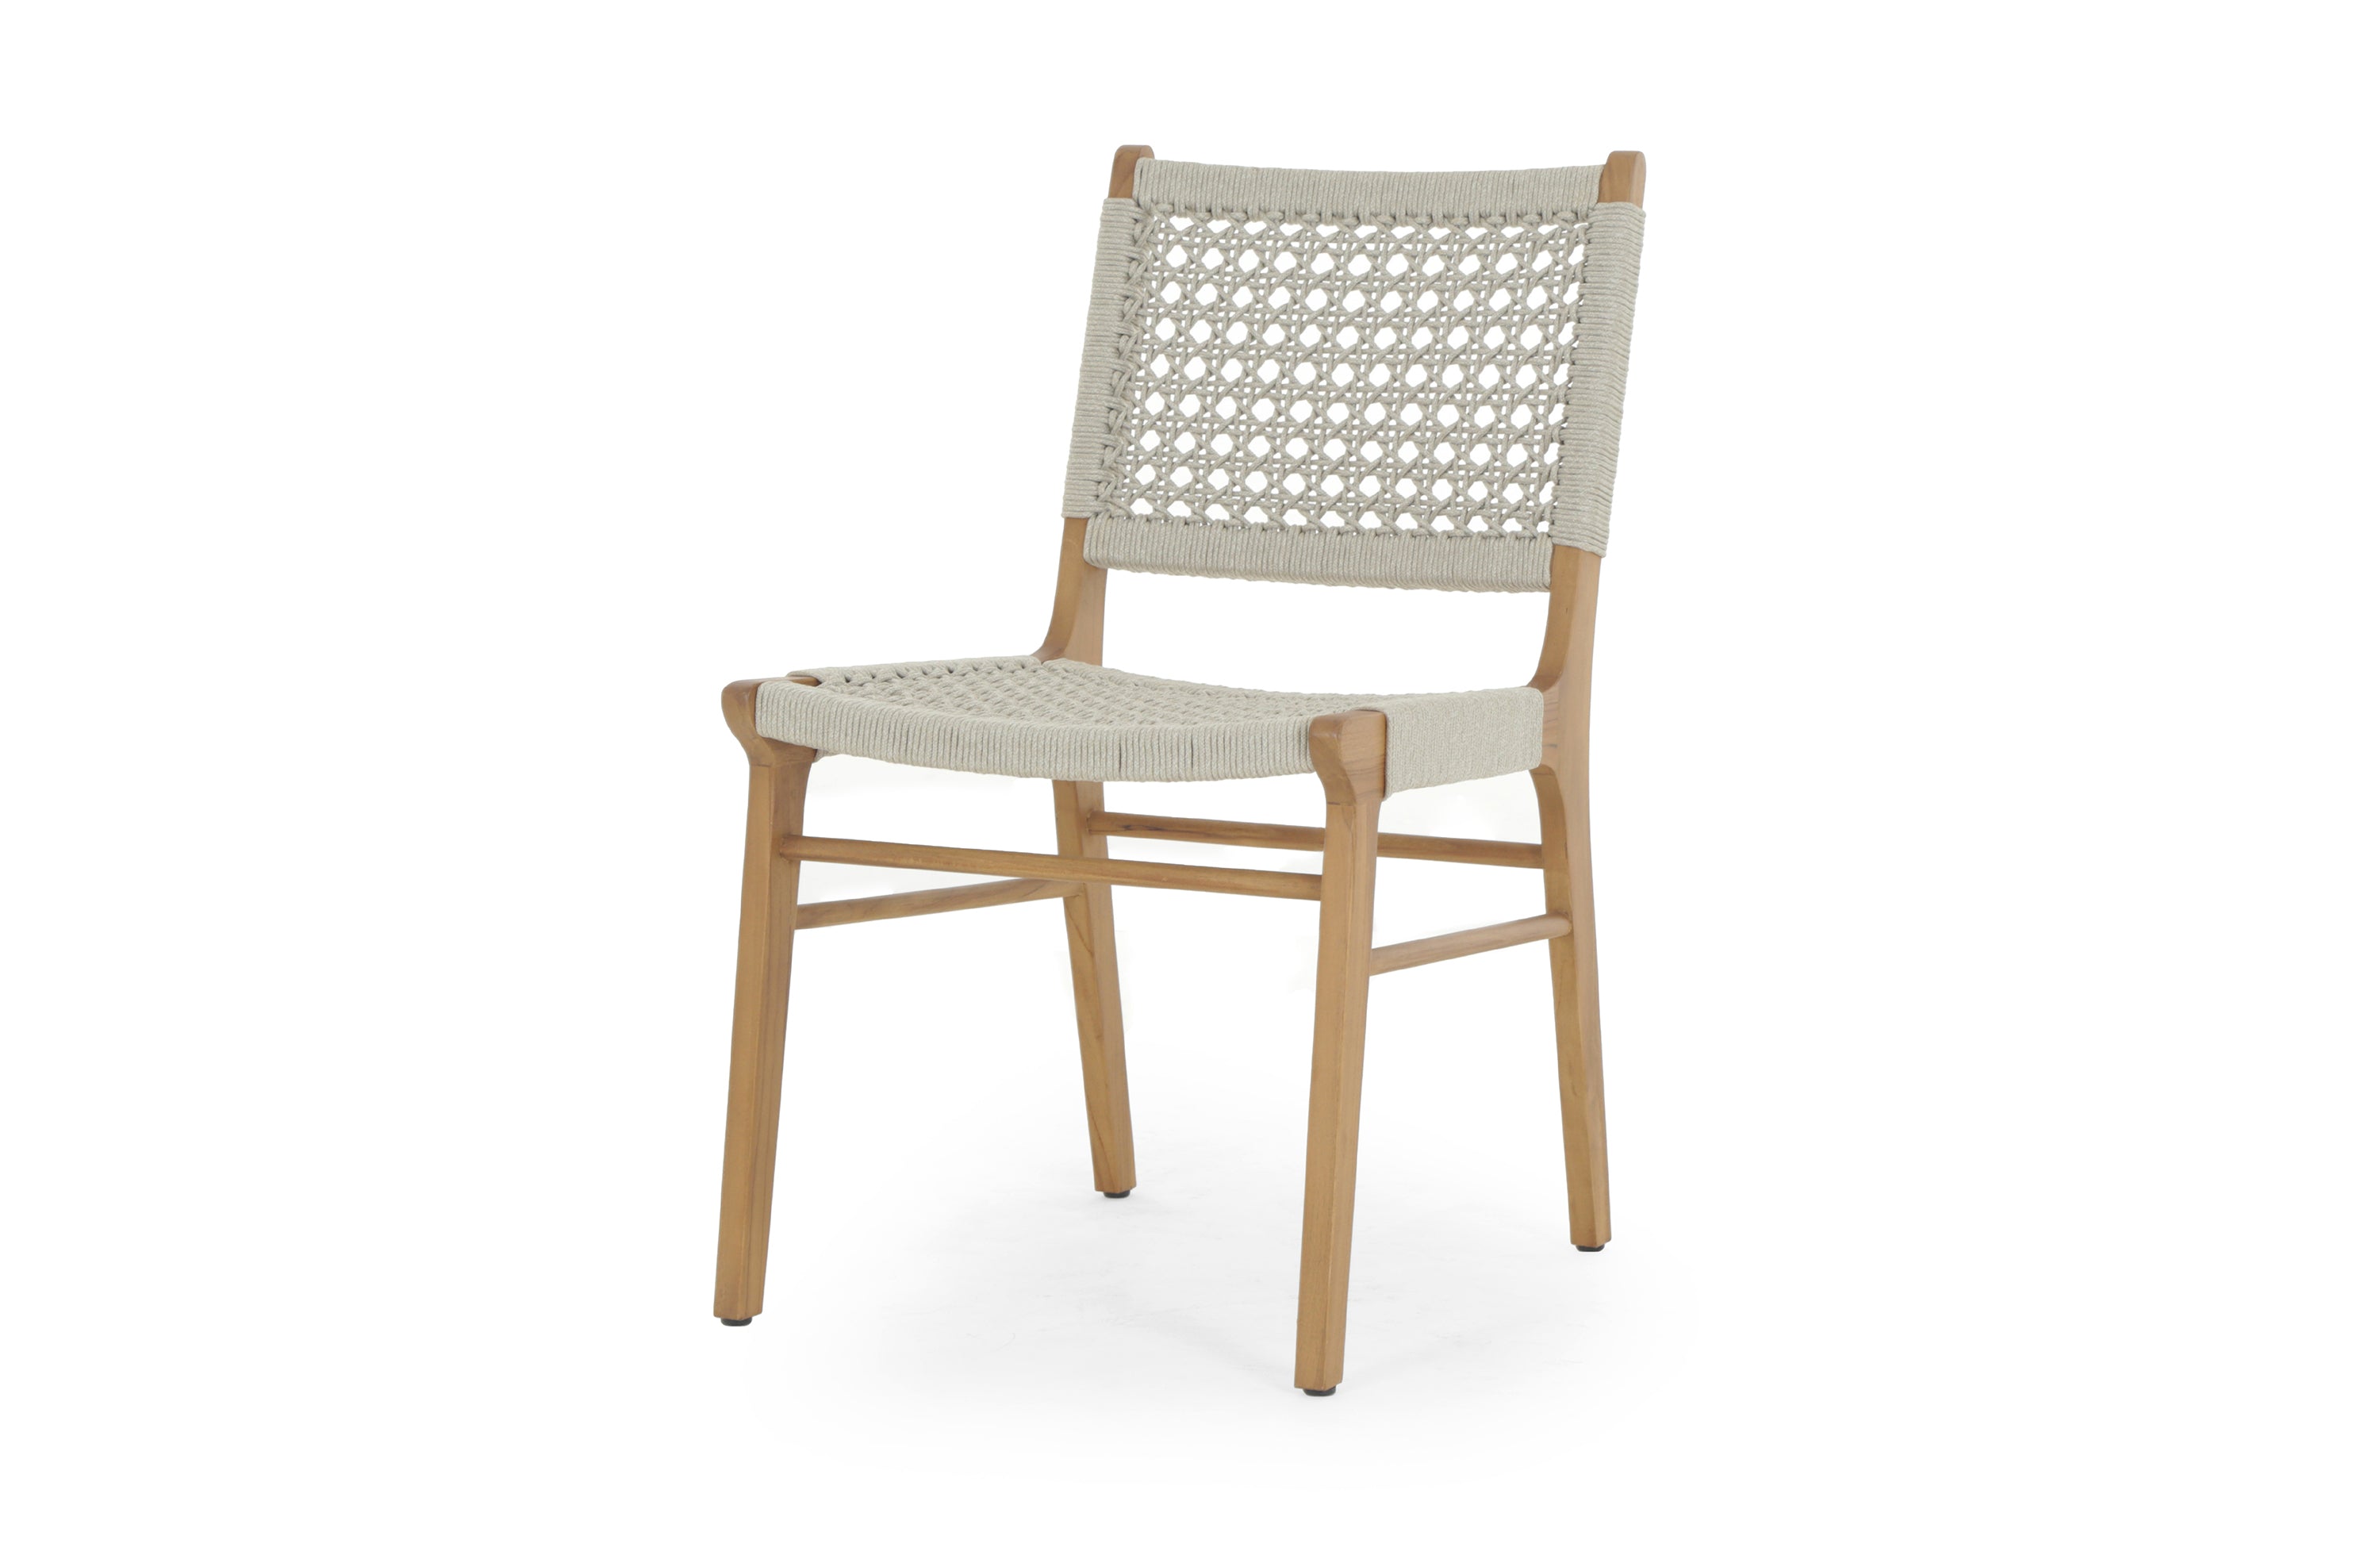 Delmar Outdoor Dining Chair